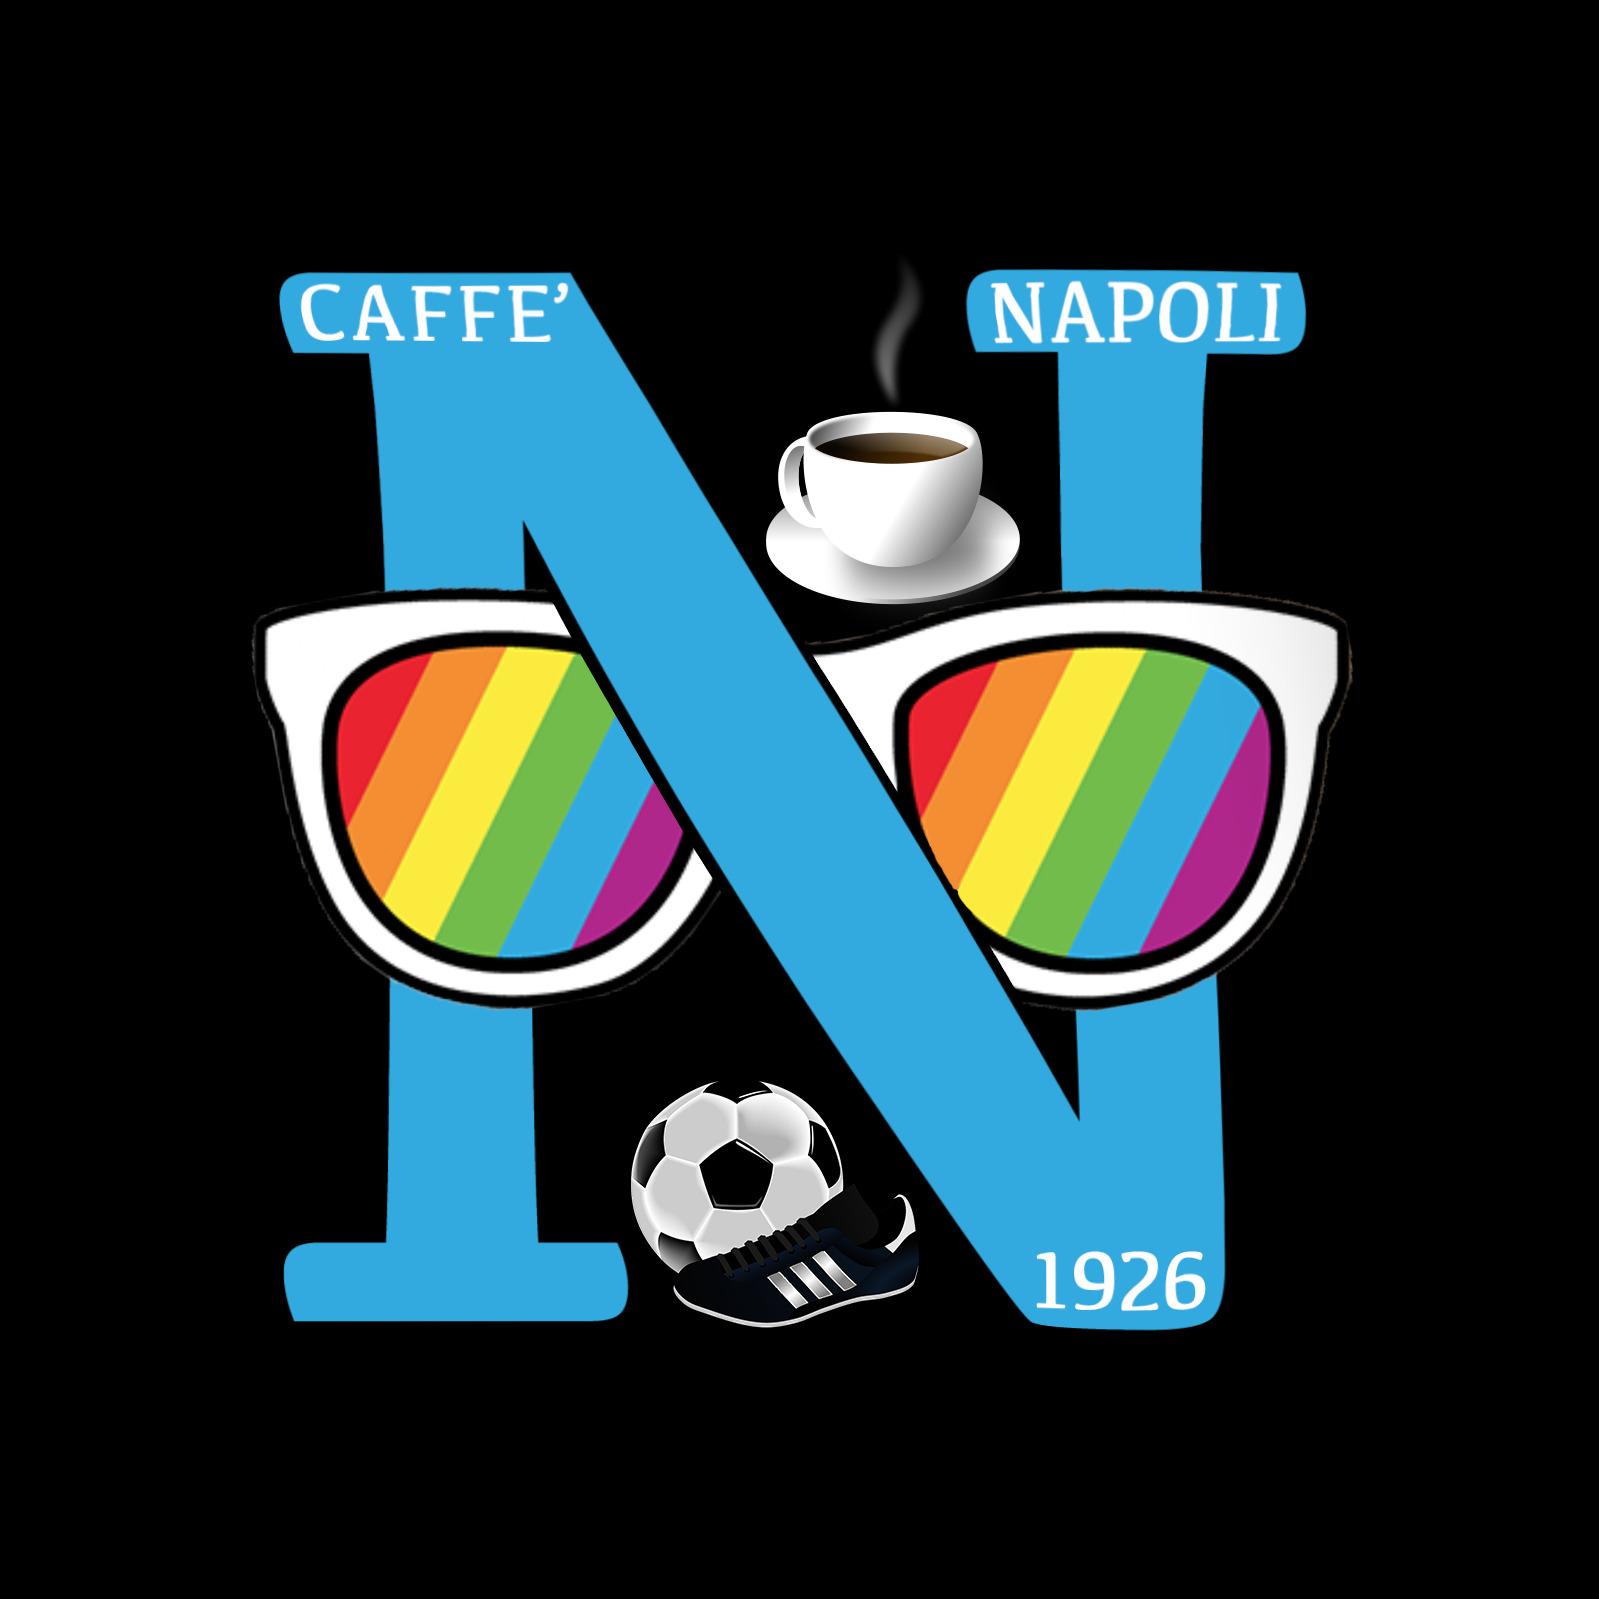 Caffe Napoli 1926